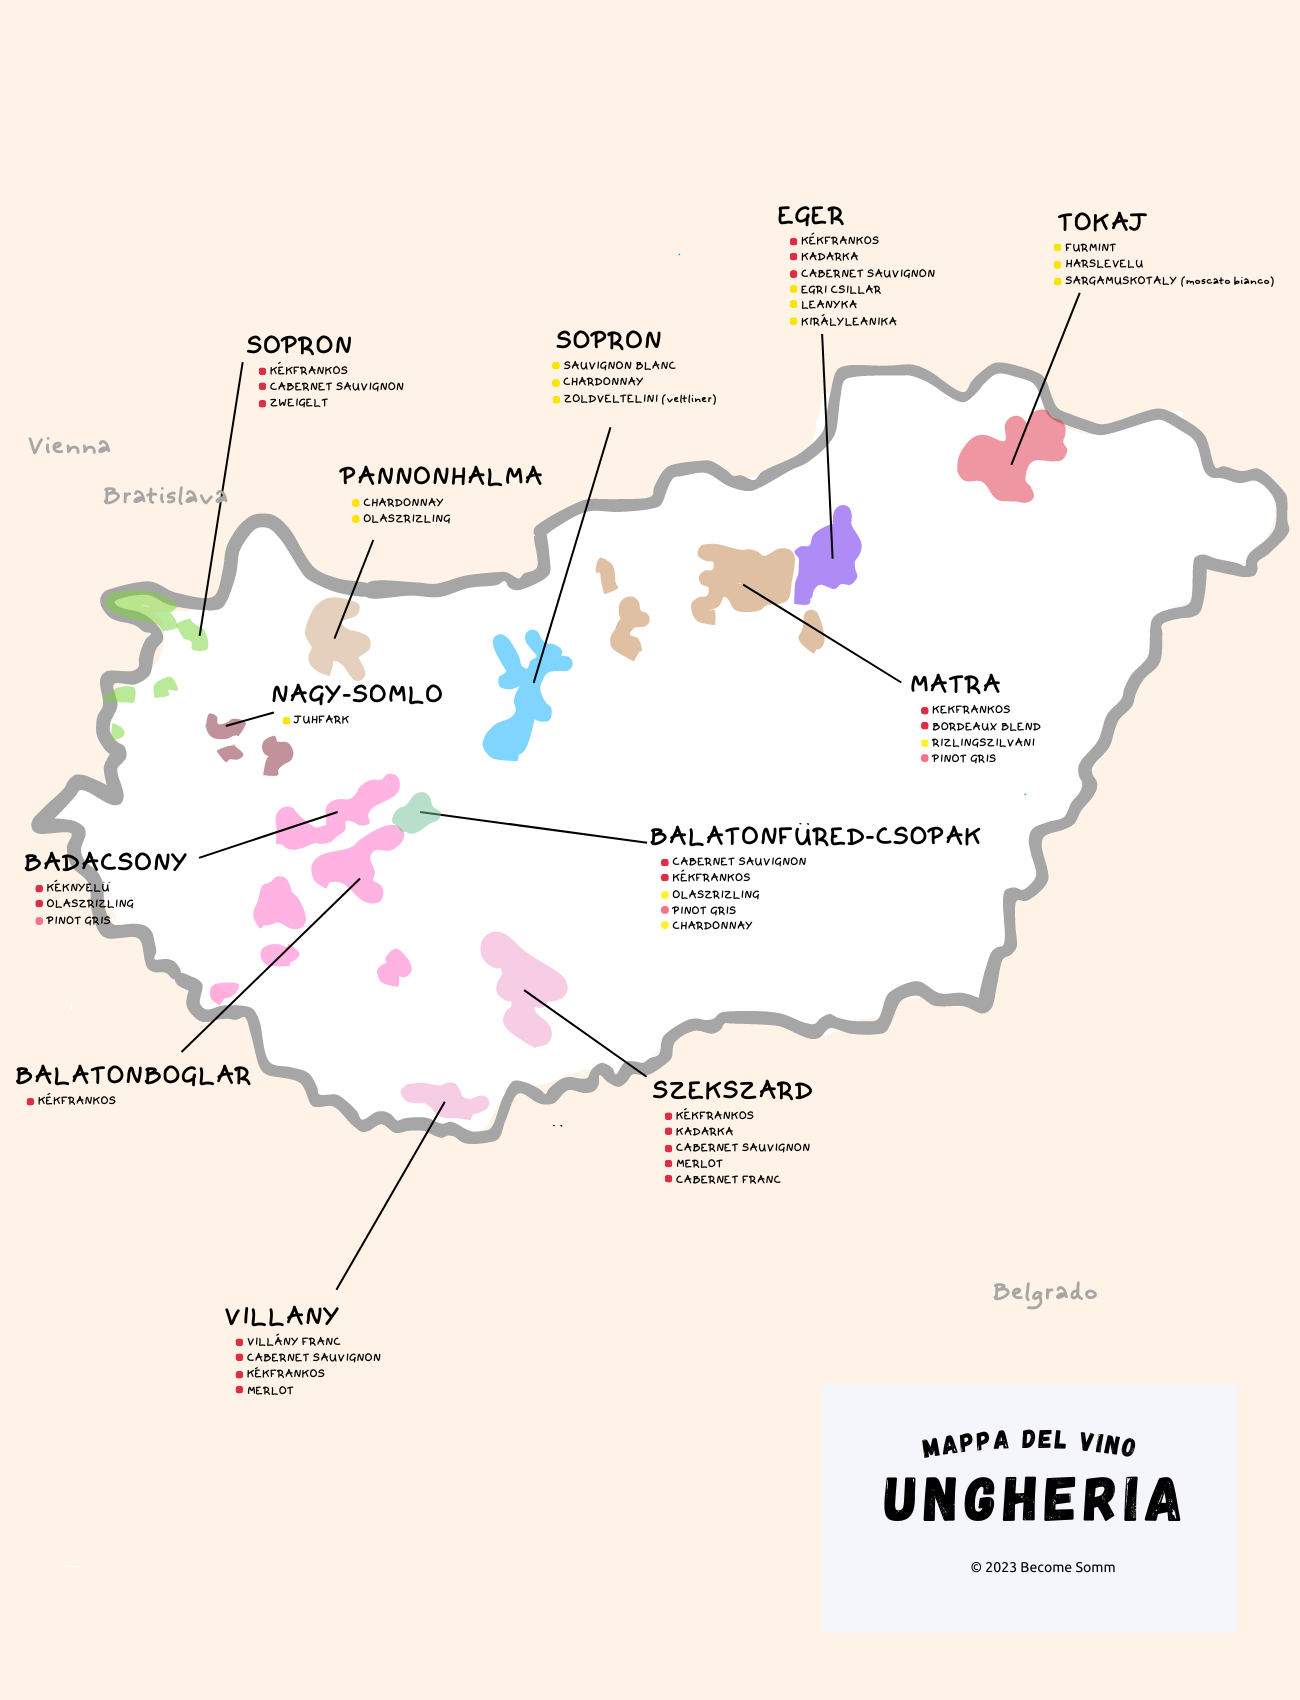 Hungary Wine map
Ungheria mappa del vino
Magyarország bortérkép